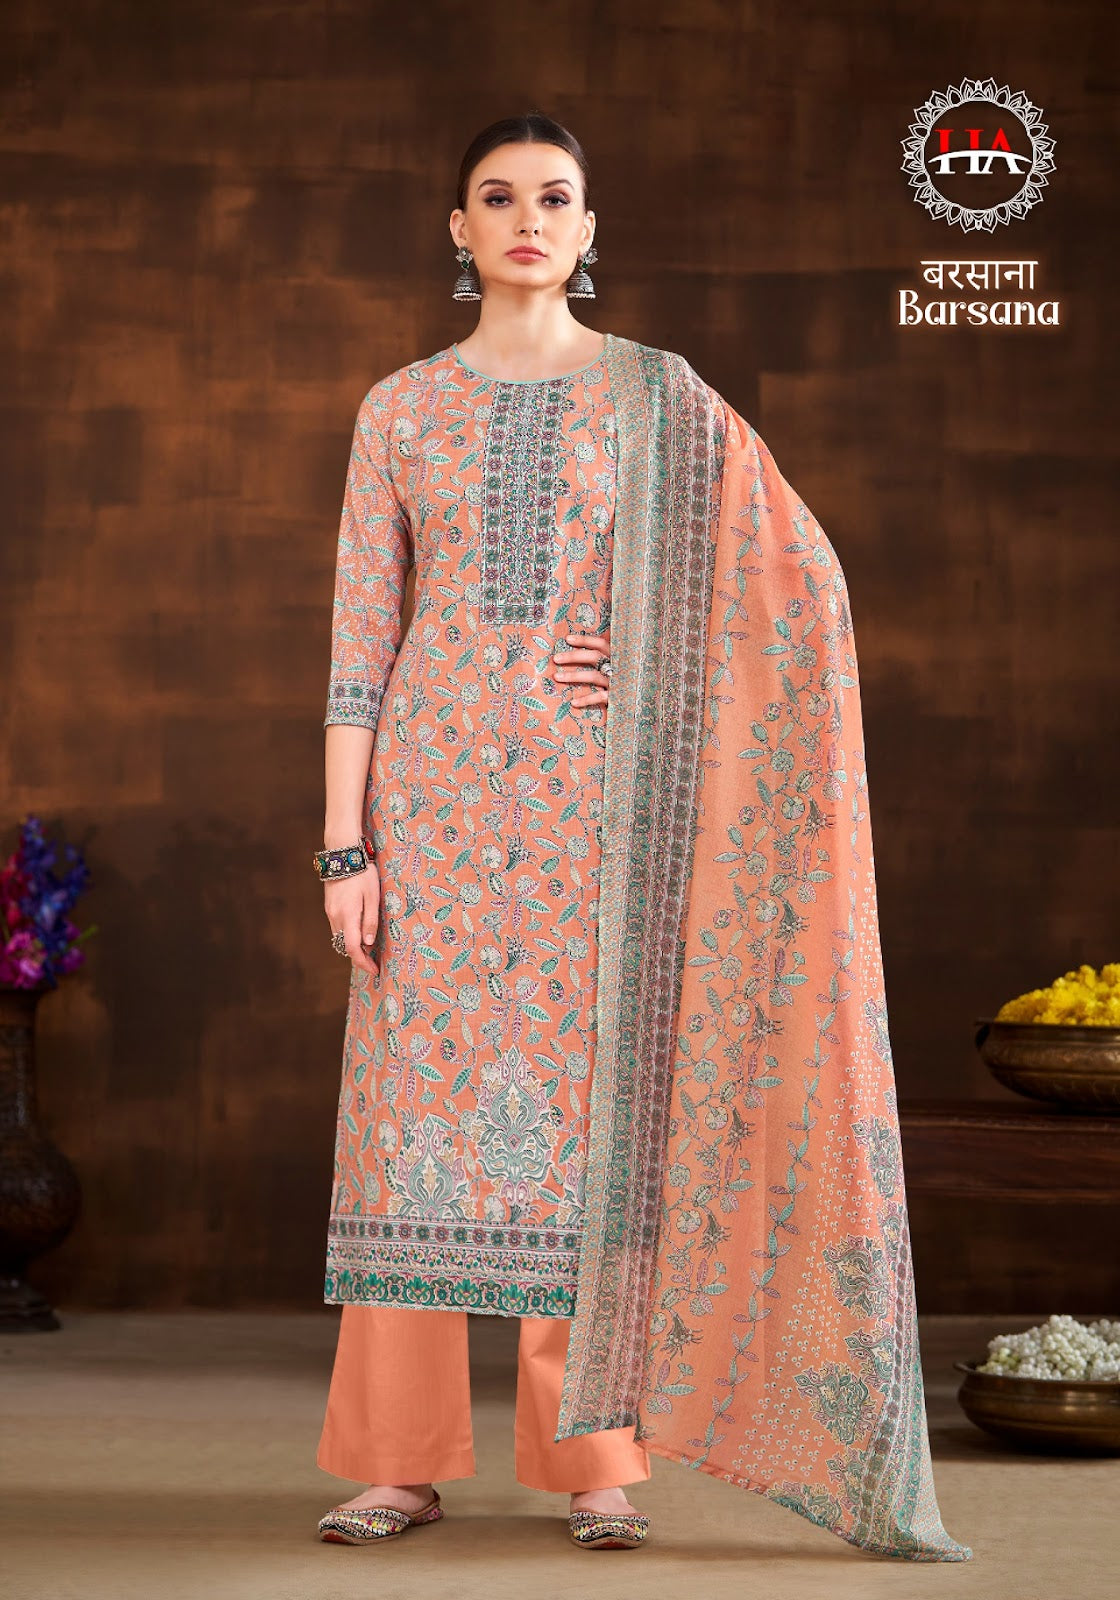 Barsana Harshit Fashion Pure Cotton Plazzo Style Suits